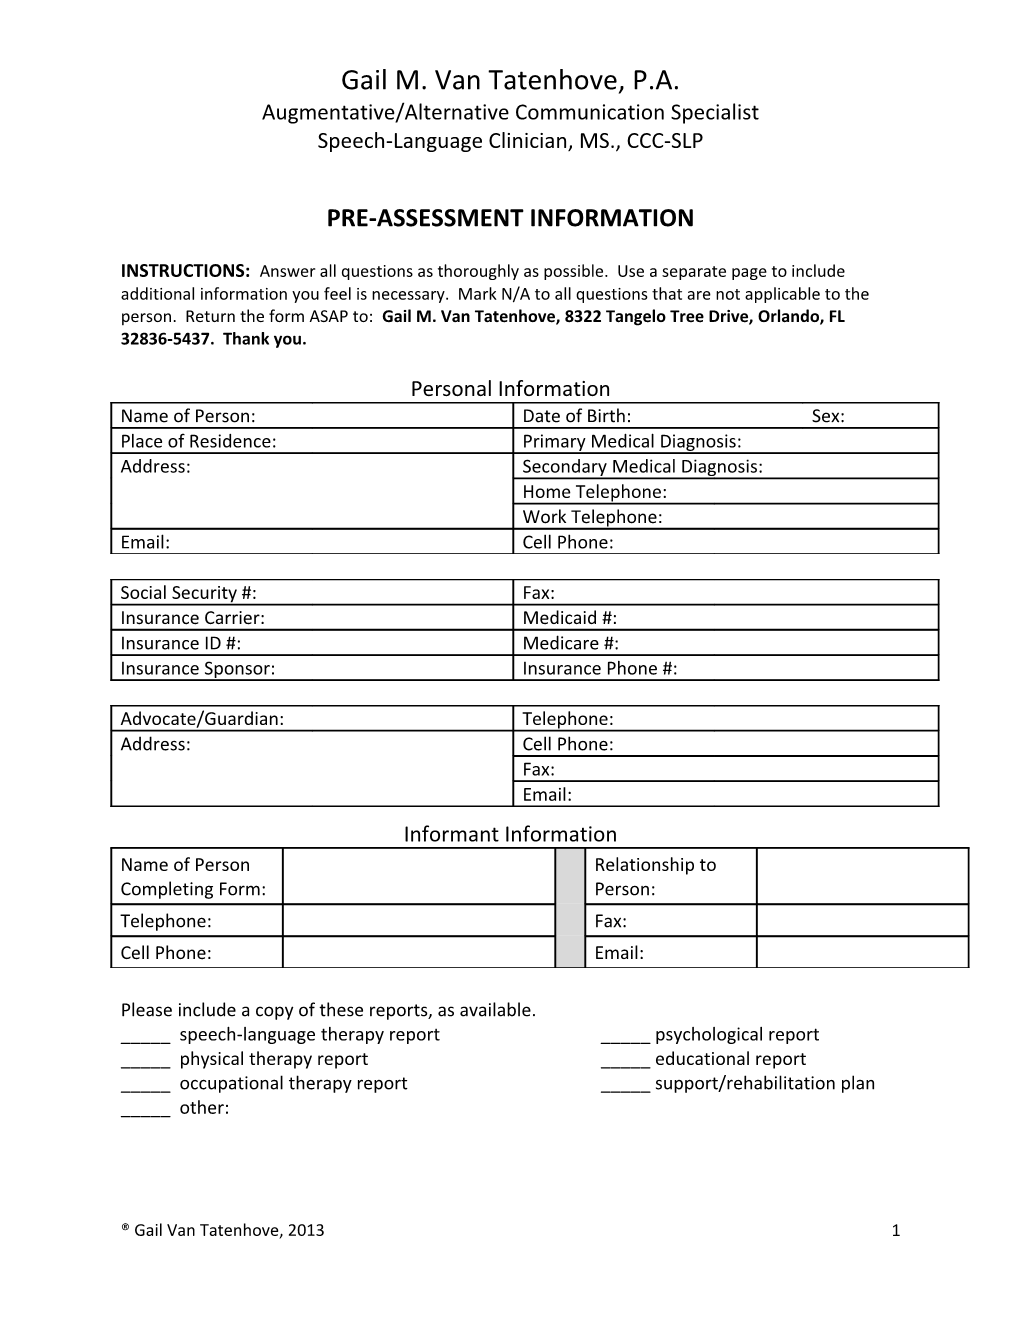 Pre-Evaluation Form Sent/Received Back PRIOR to the Evaluation